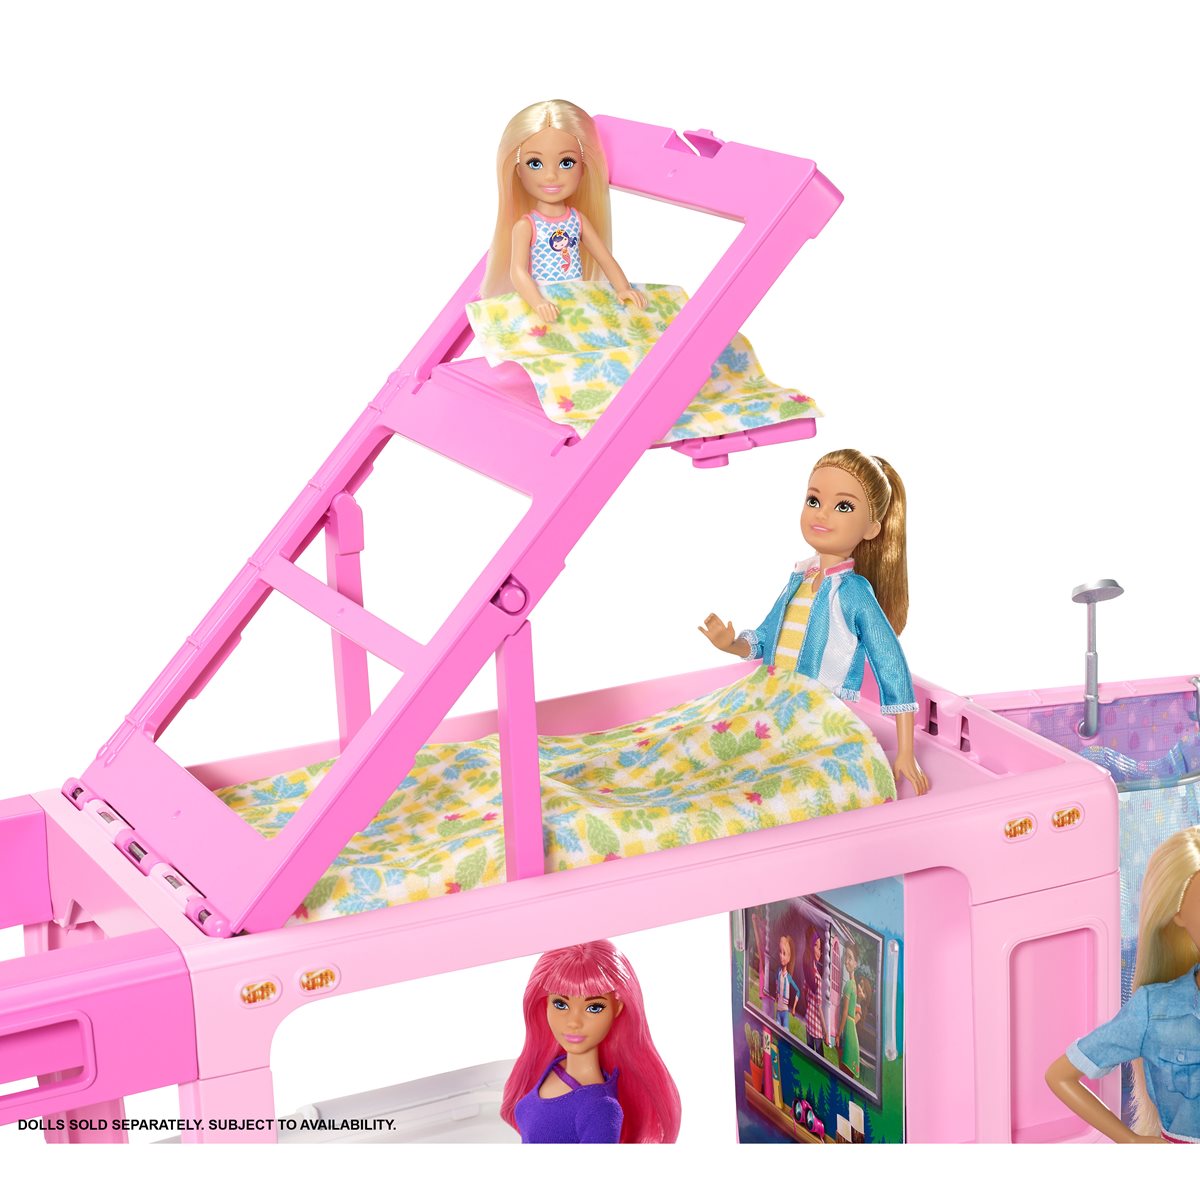 Gorgelen Danser nabootsen Barbie 3-in-1 DreamCamper Vehicle and Accessories